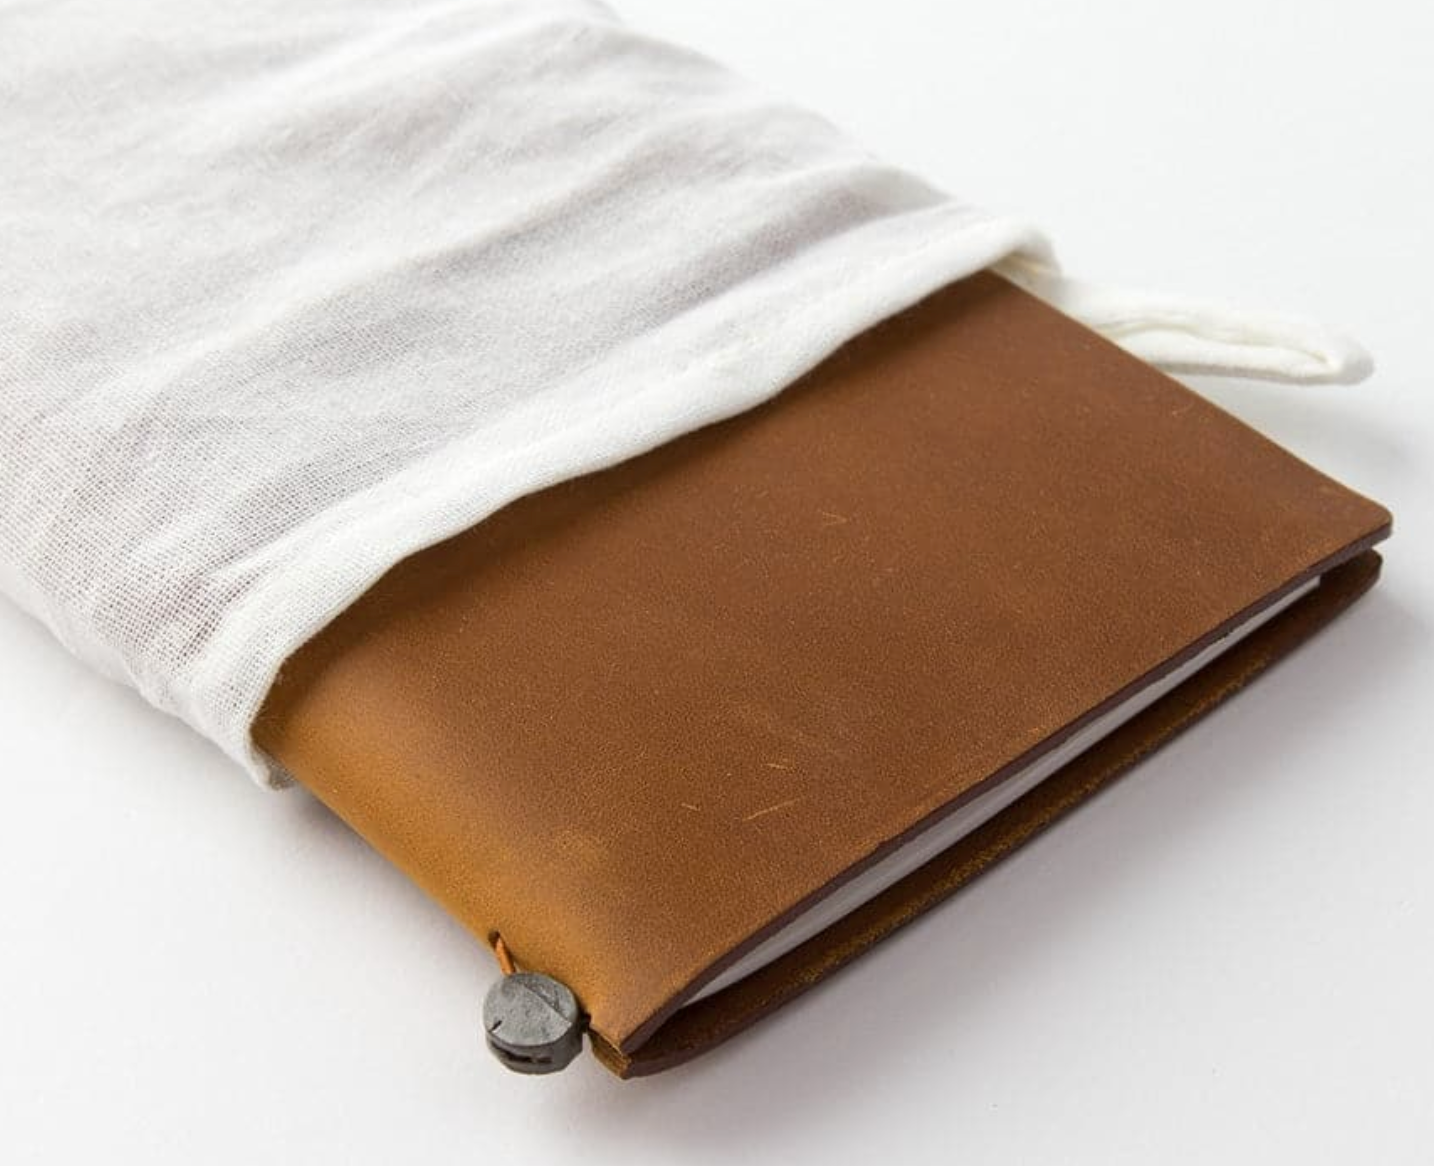 Traveler's Company Leather Notebook Camel Regular Size